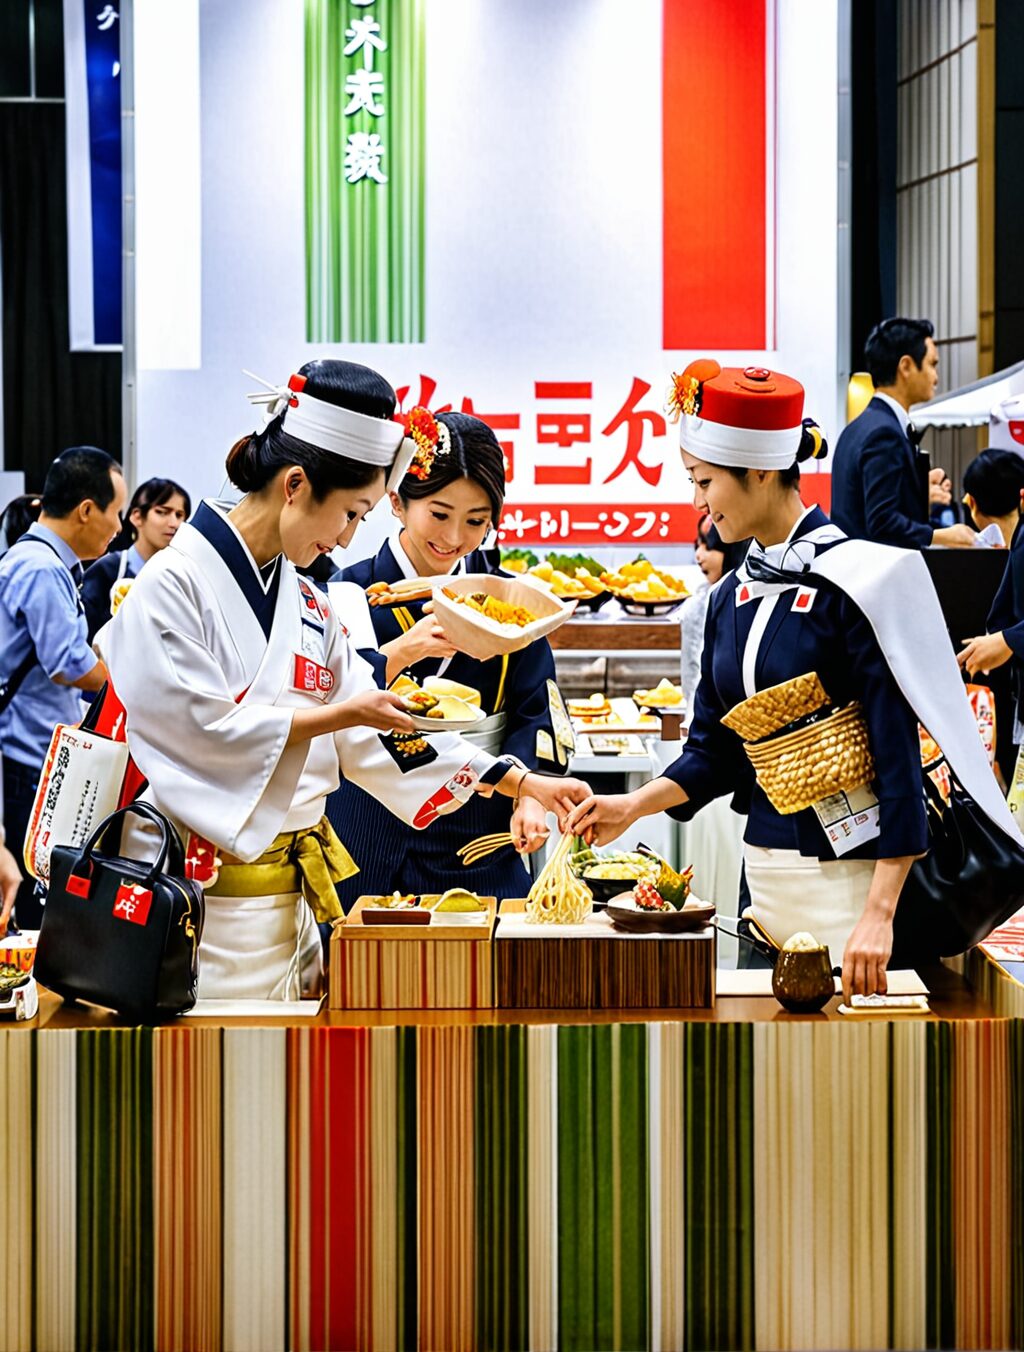 japan food travel show